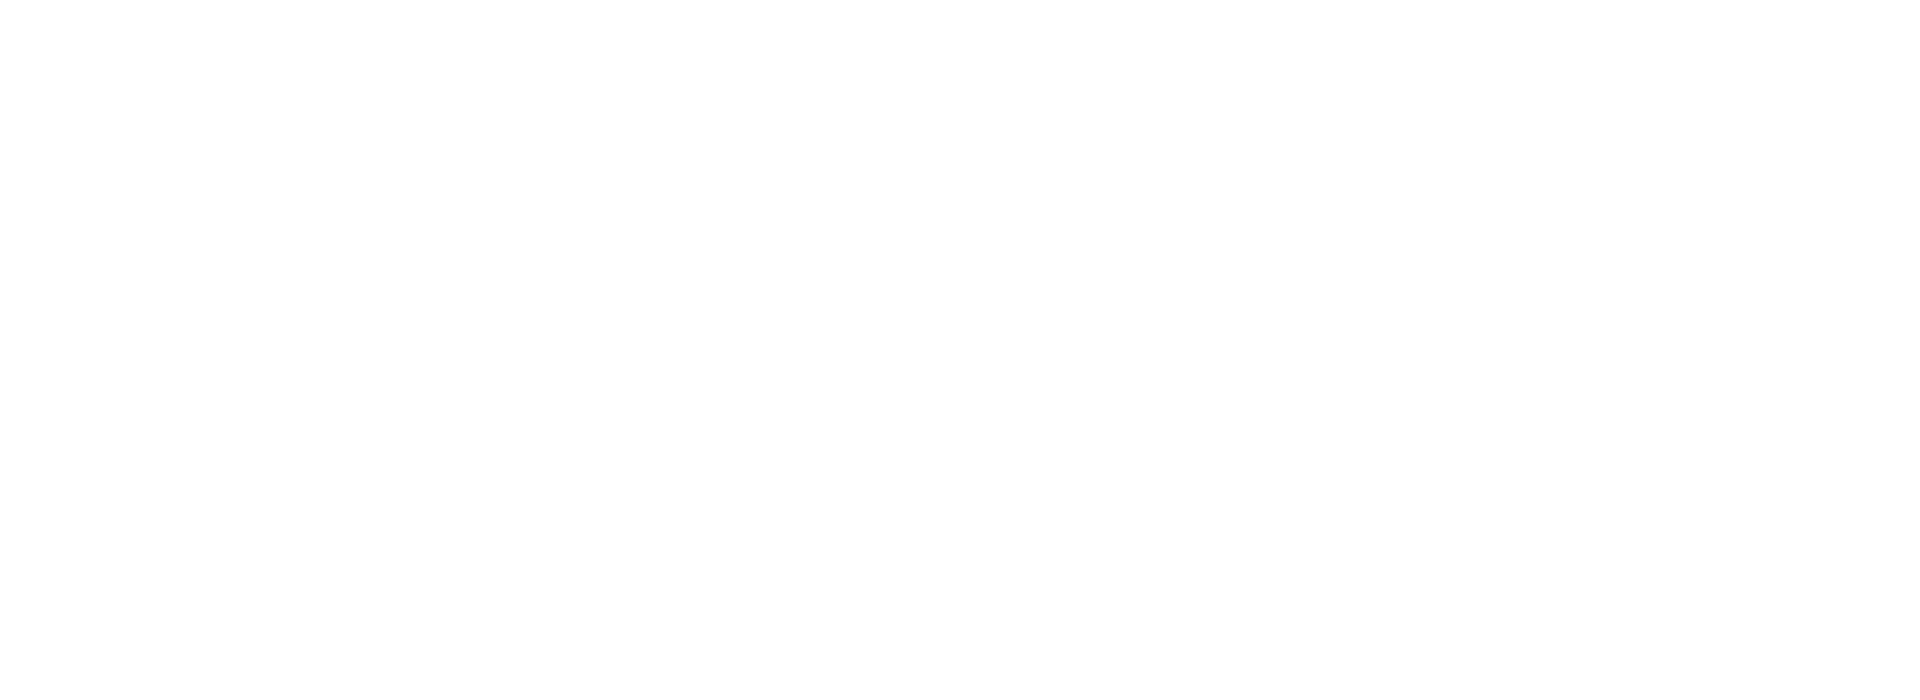 spp-logo-with-back